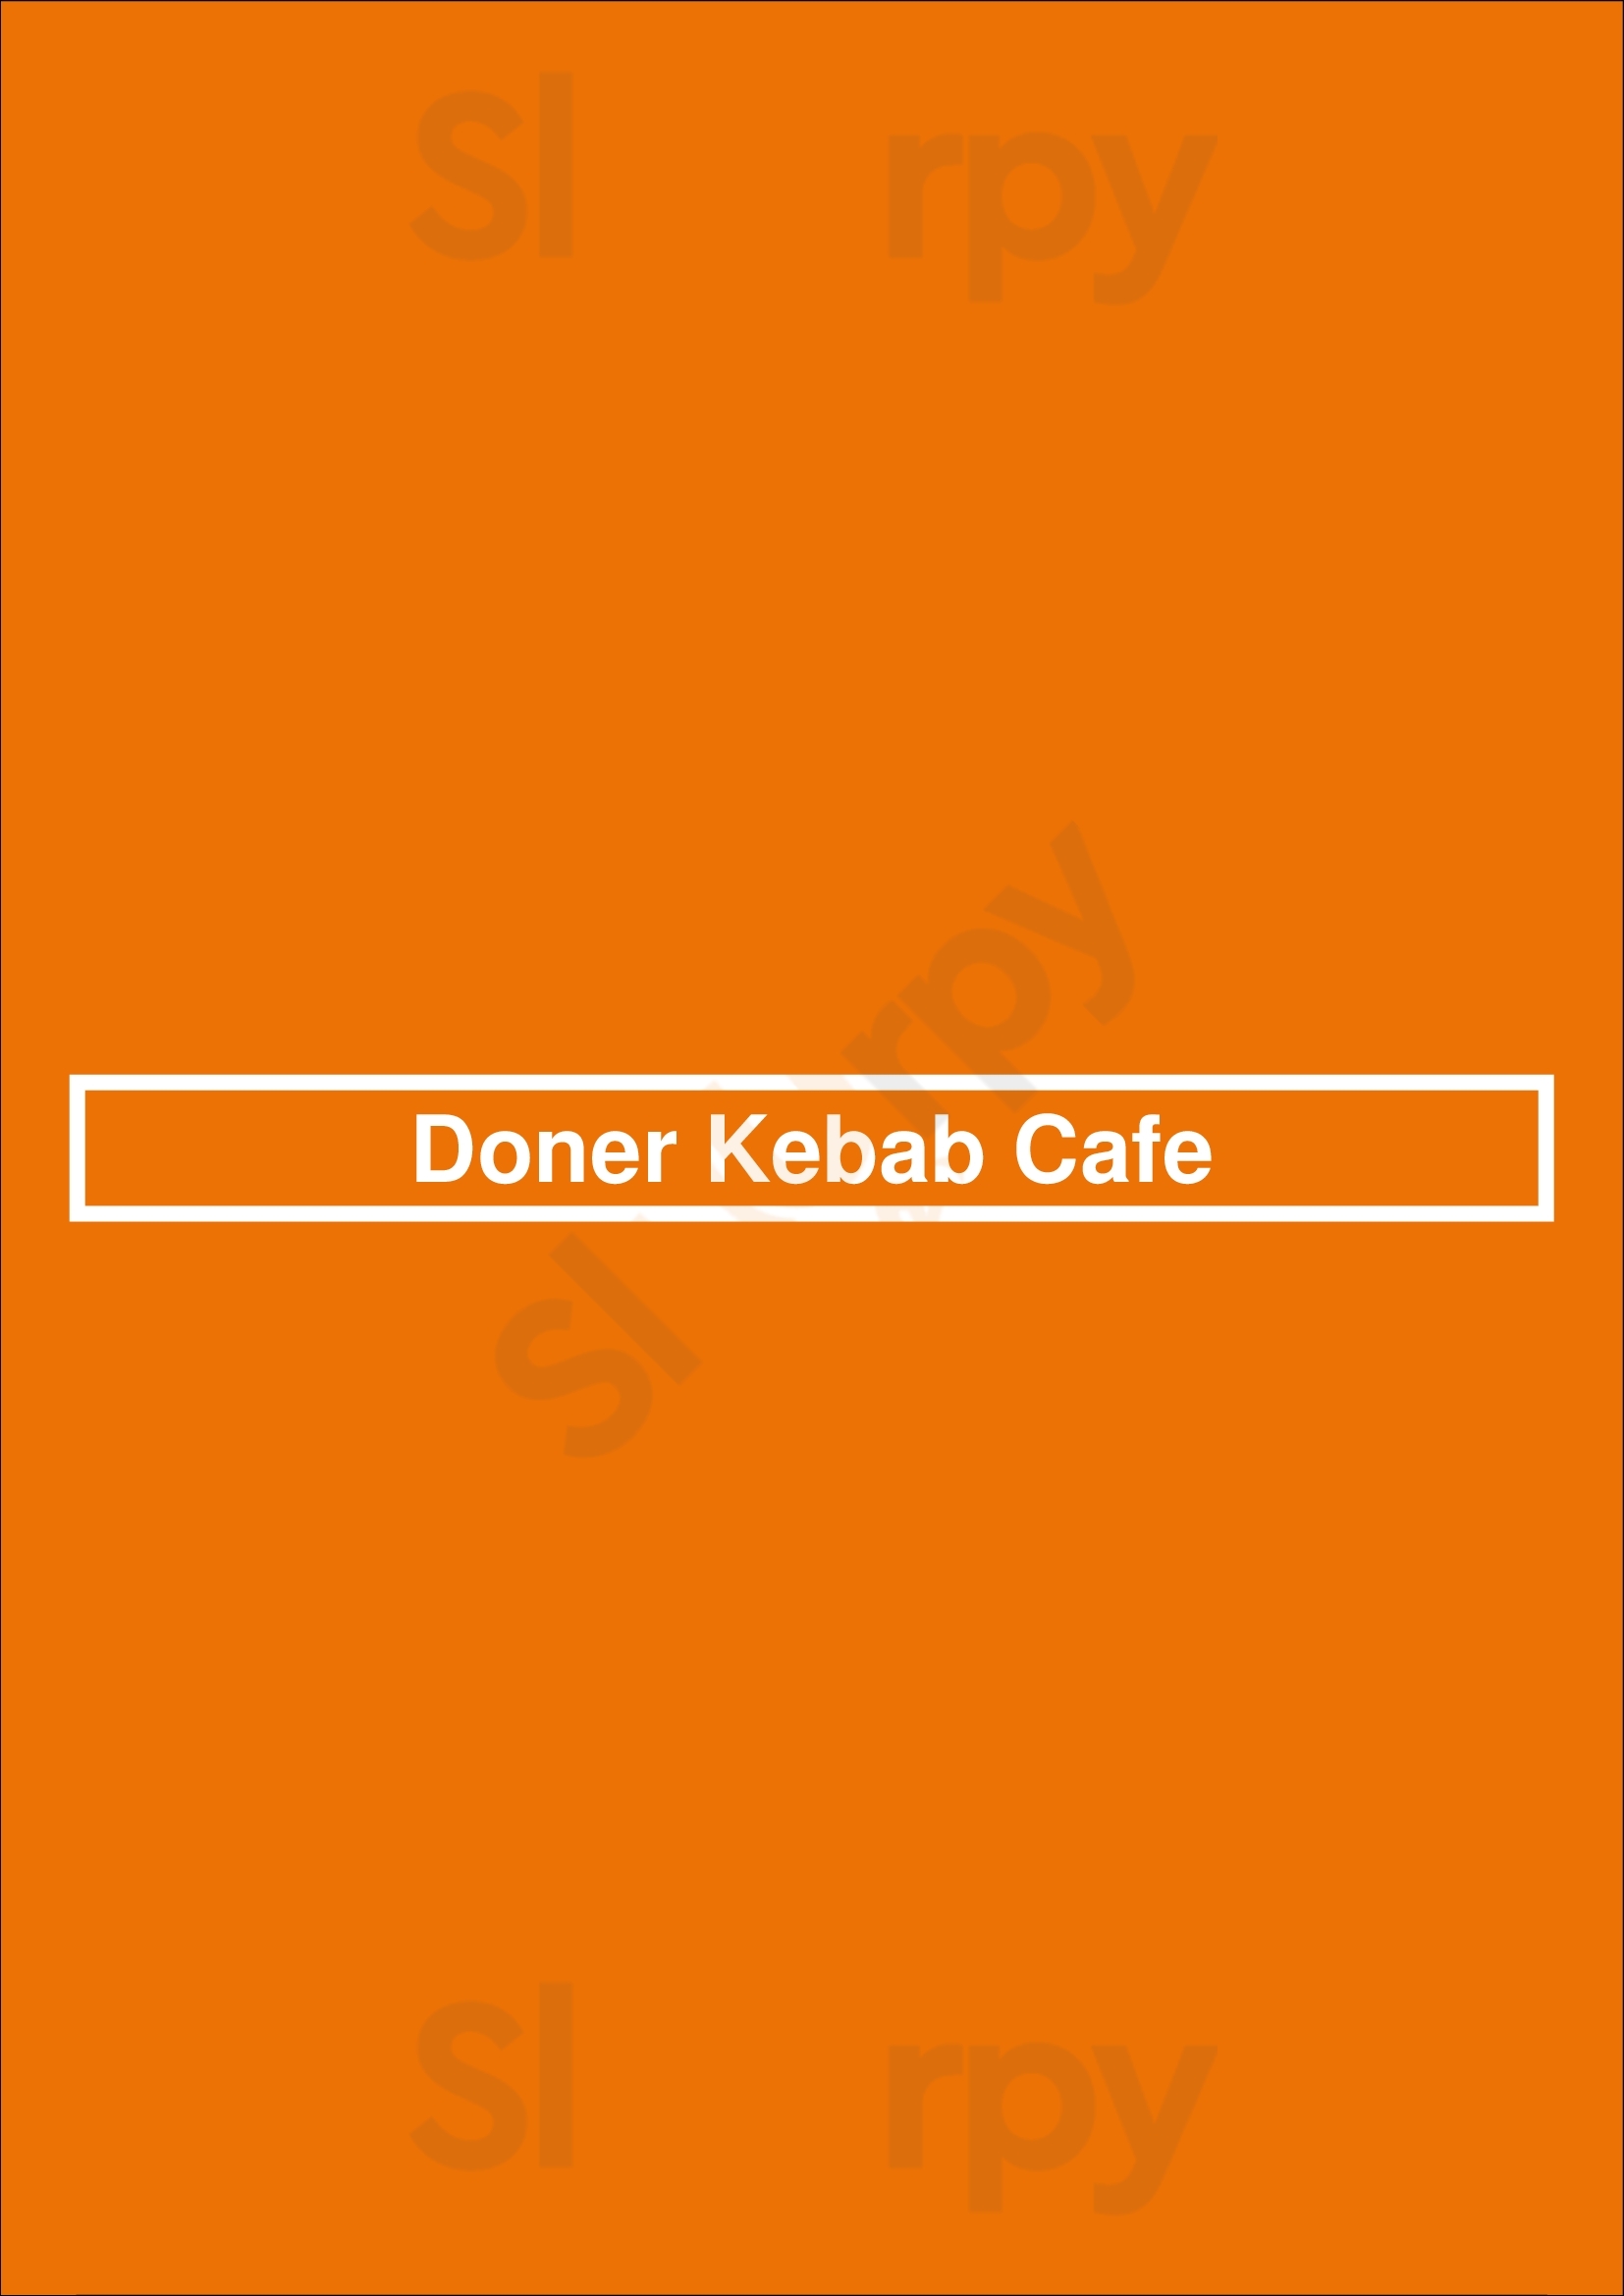 Doner Kebab Cafe San Antonio Menu - 1